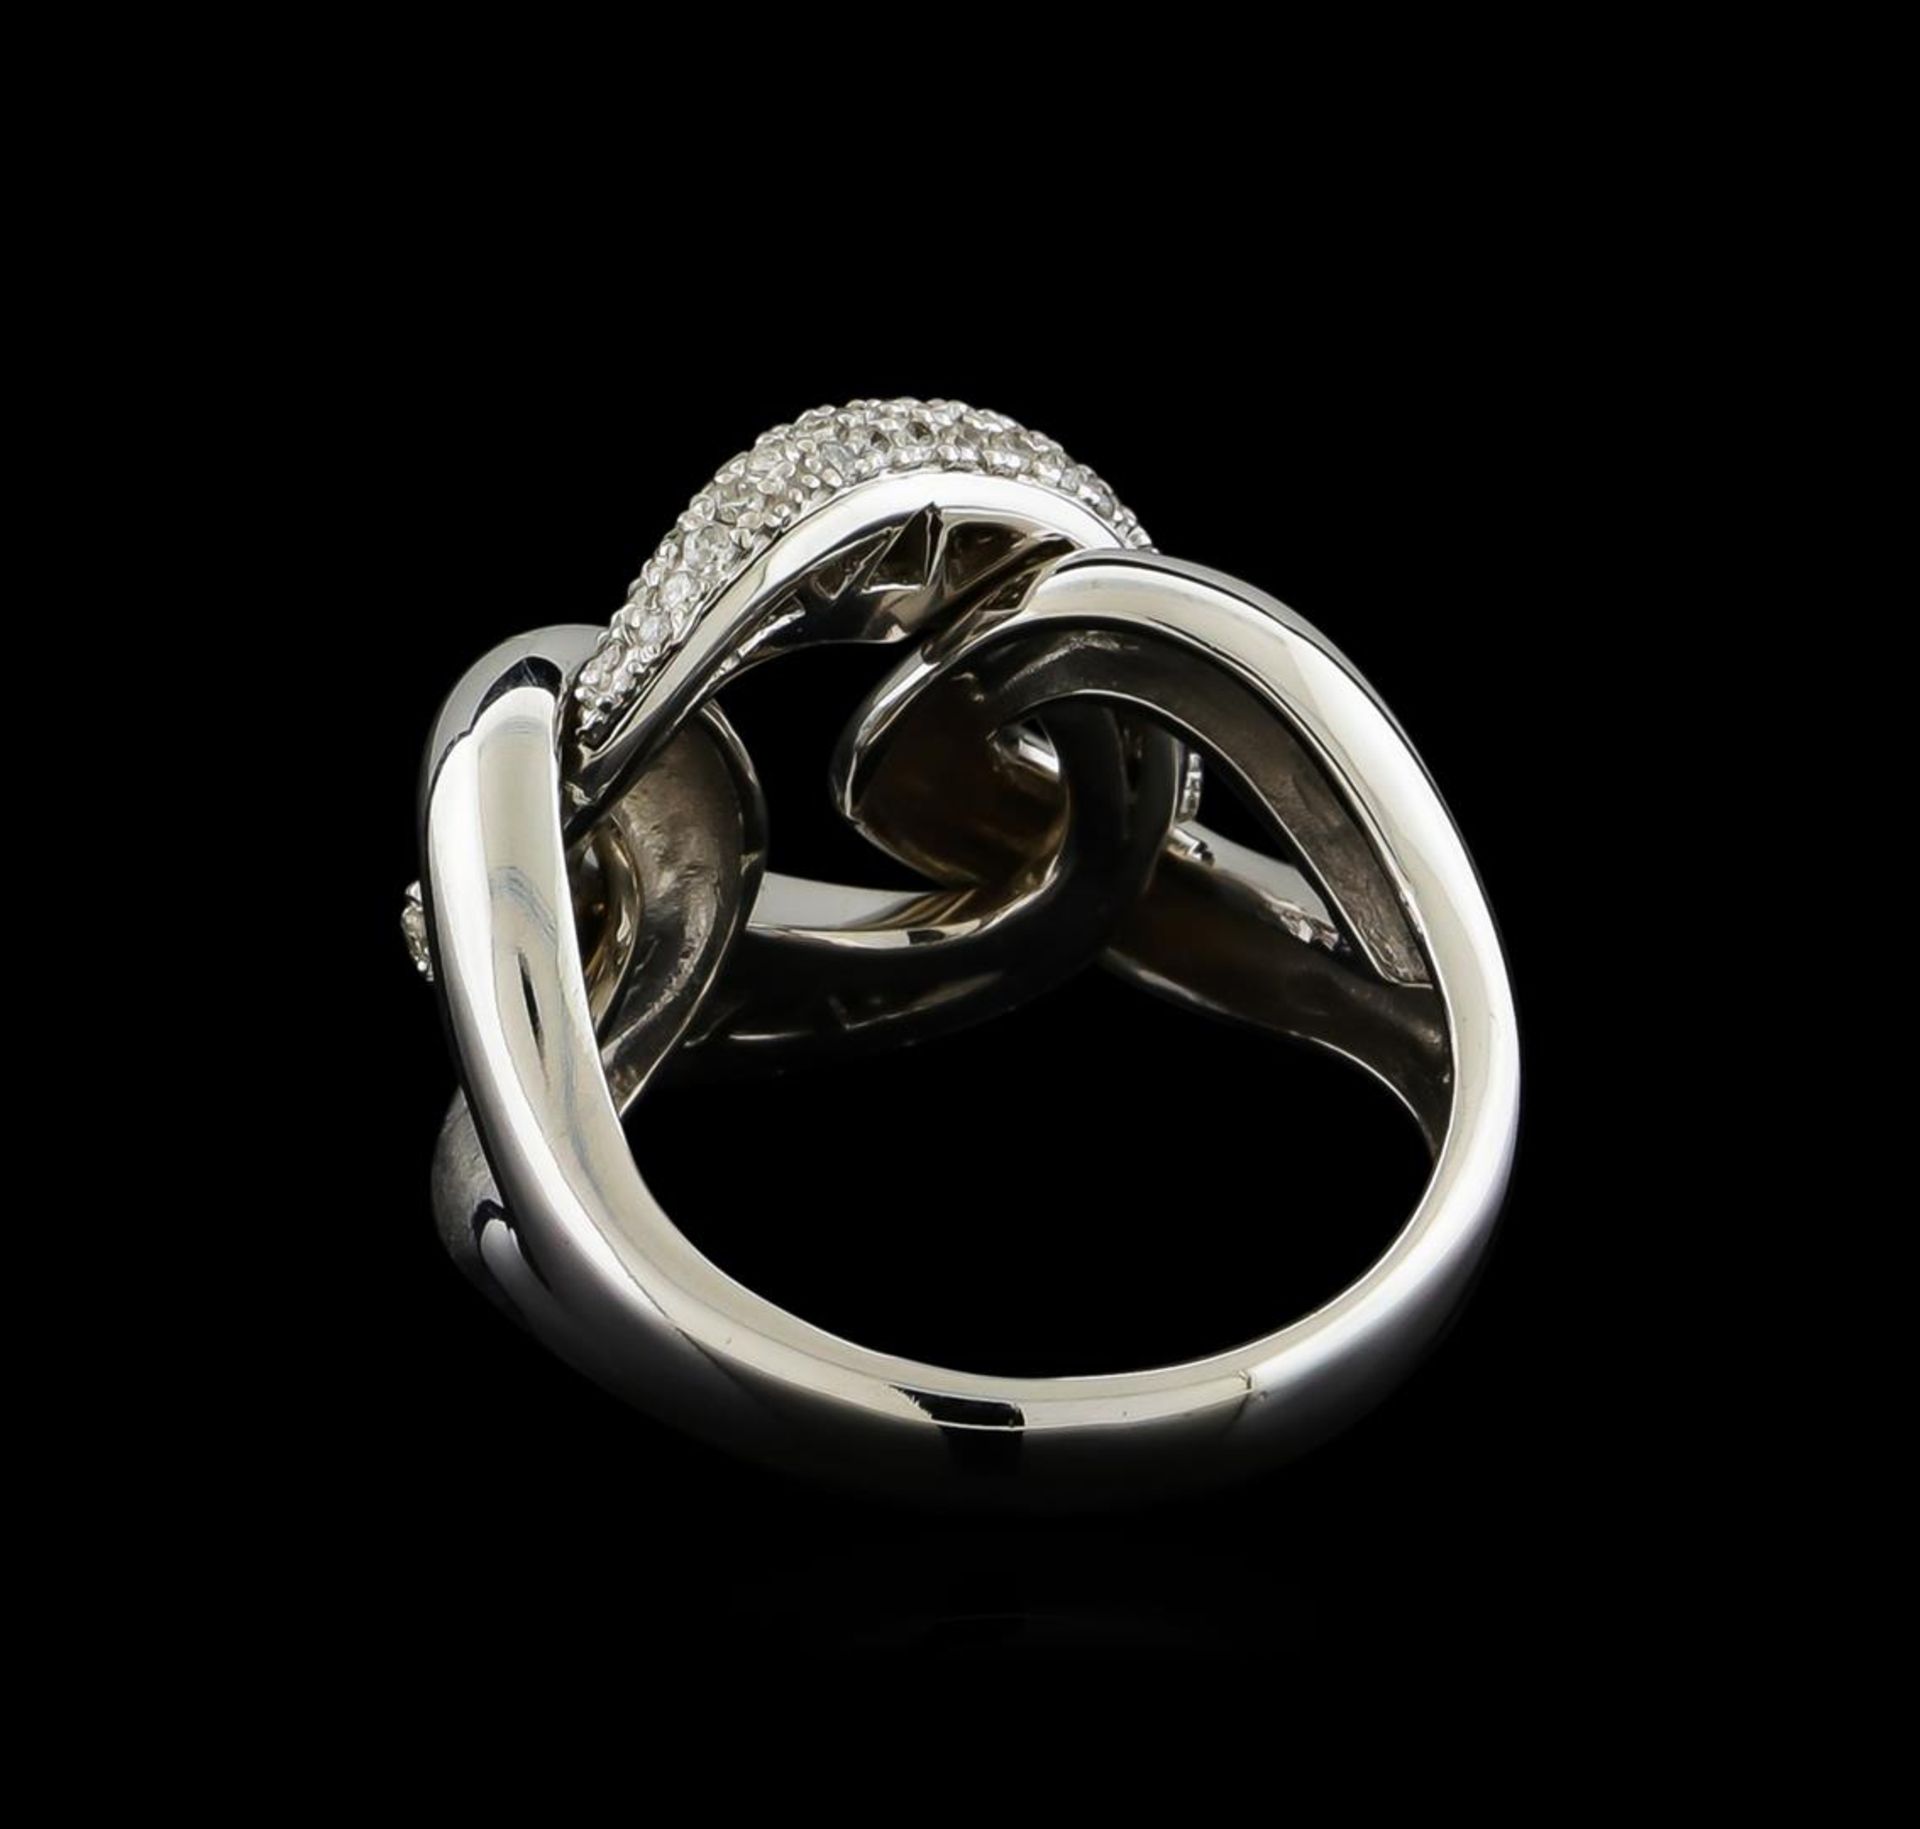 0.48 ctw Diamond Ring - 14KT White Gold - Image 3 of 4